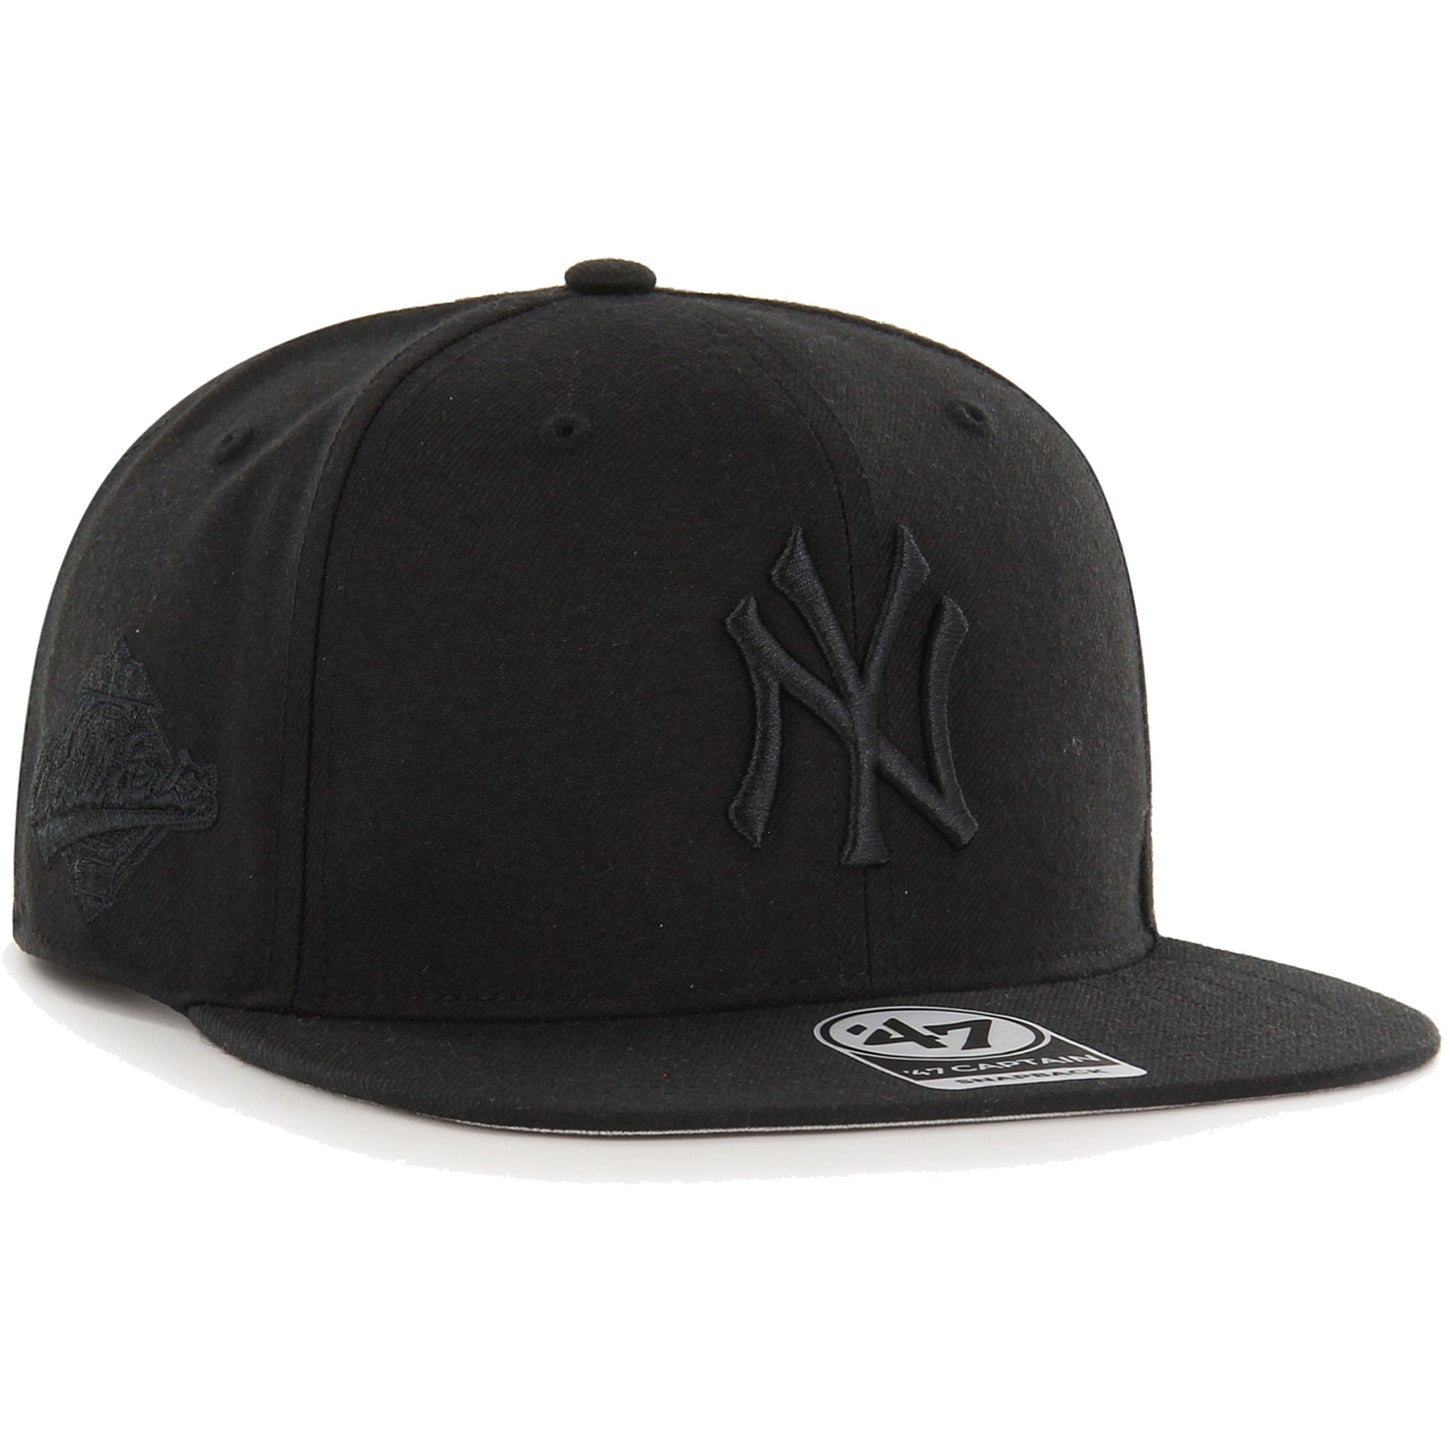 New York Yankees '47 Black on Black Sure Shot Captain Snapback Hat